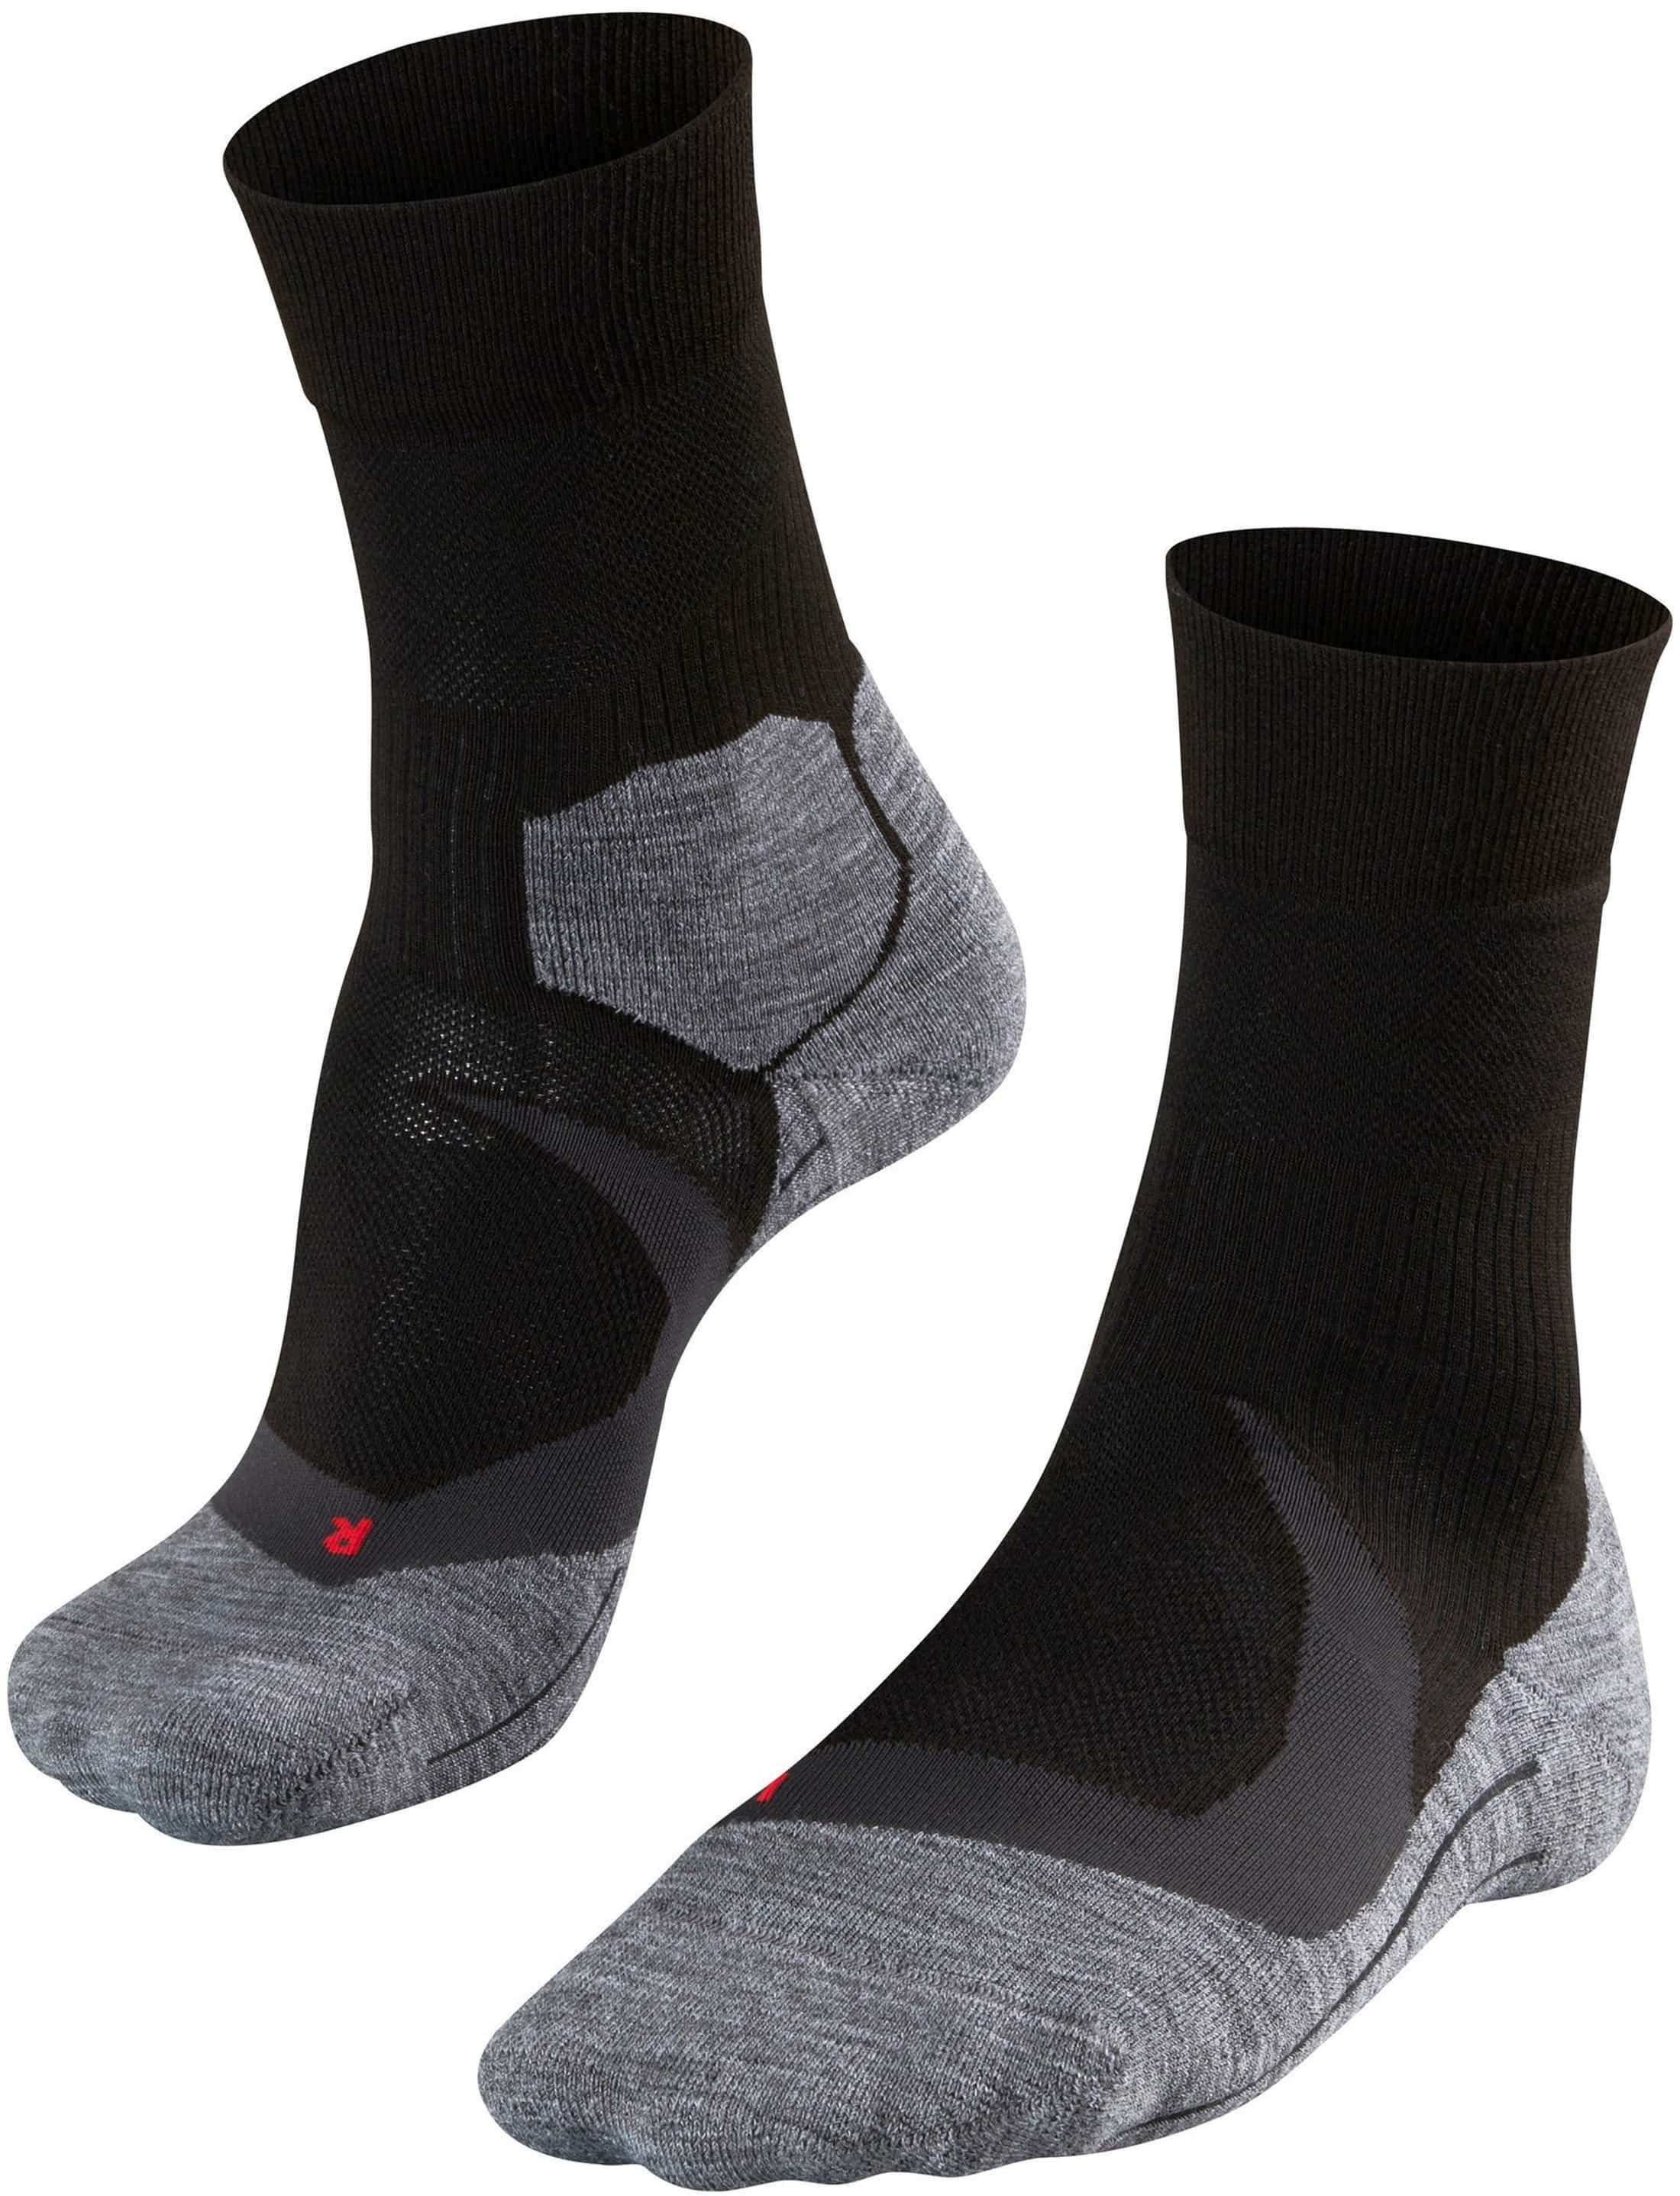 Falke RU4 Cool Socks Black size 39-41